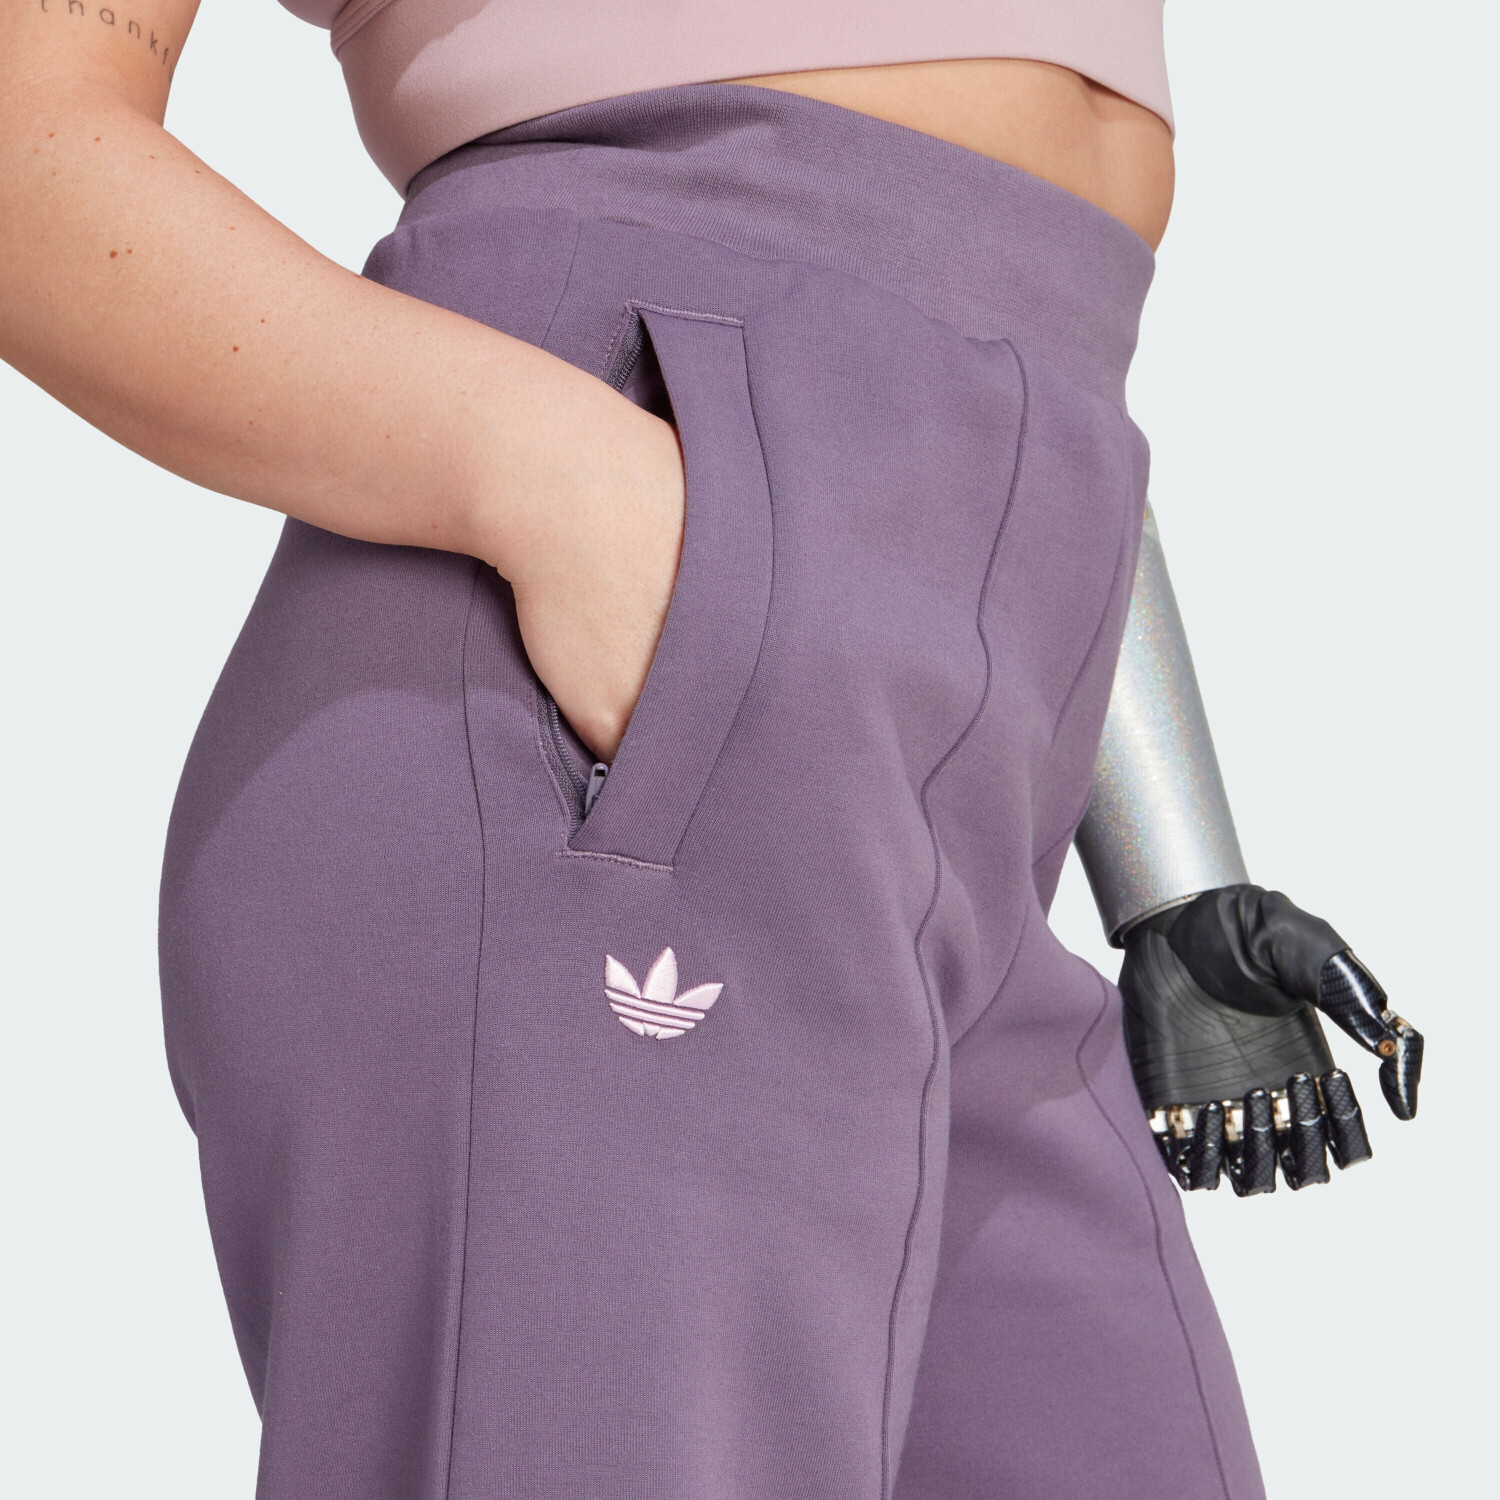 (IP6508) Training ab | Preisvergleich violet shadow Neuclassics bei Adidas Pants Woman € 52,99 adicolor